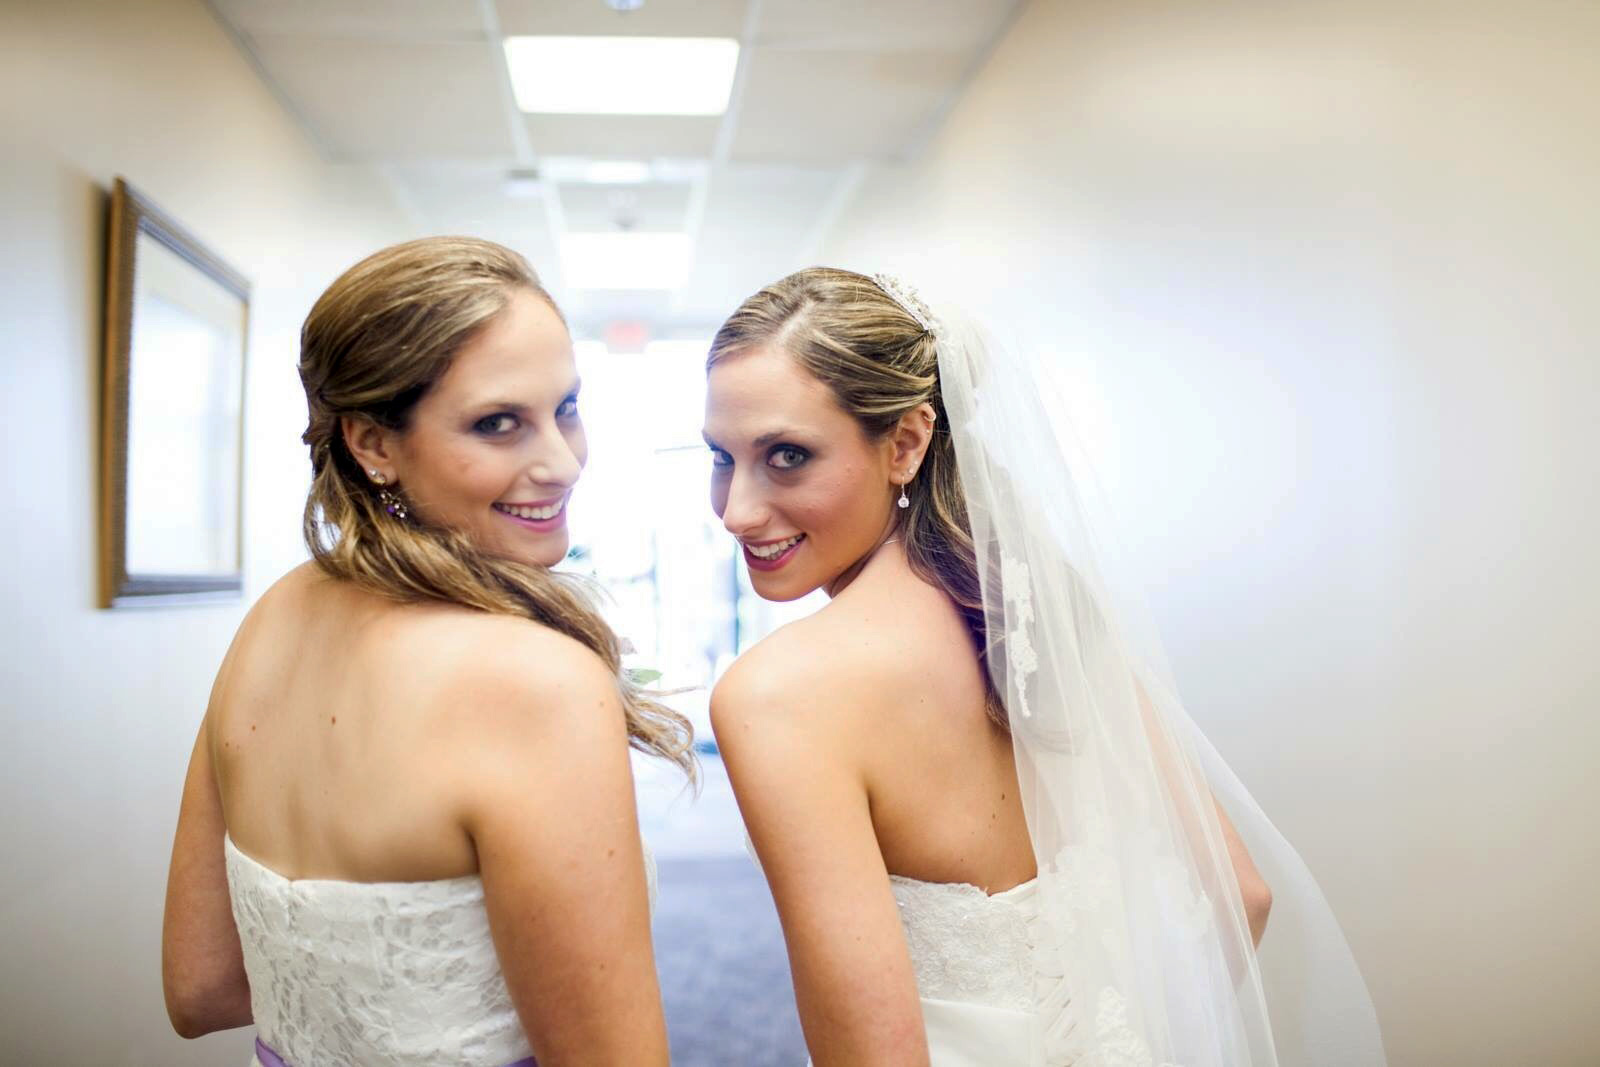 Twins Samantha Schilit (left) and Arielle Schilit Nitenson (right) at Nitenson’s wedding in 2013.